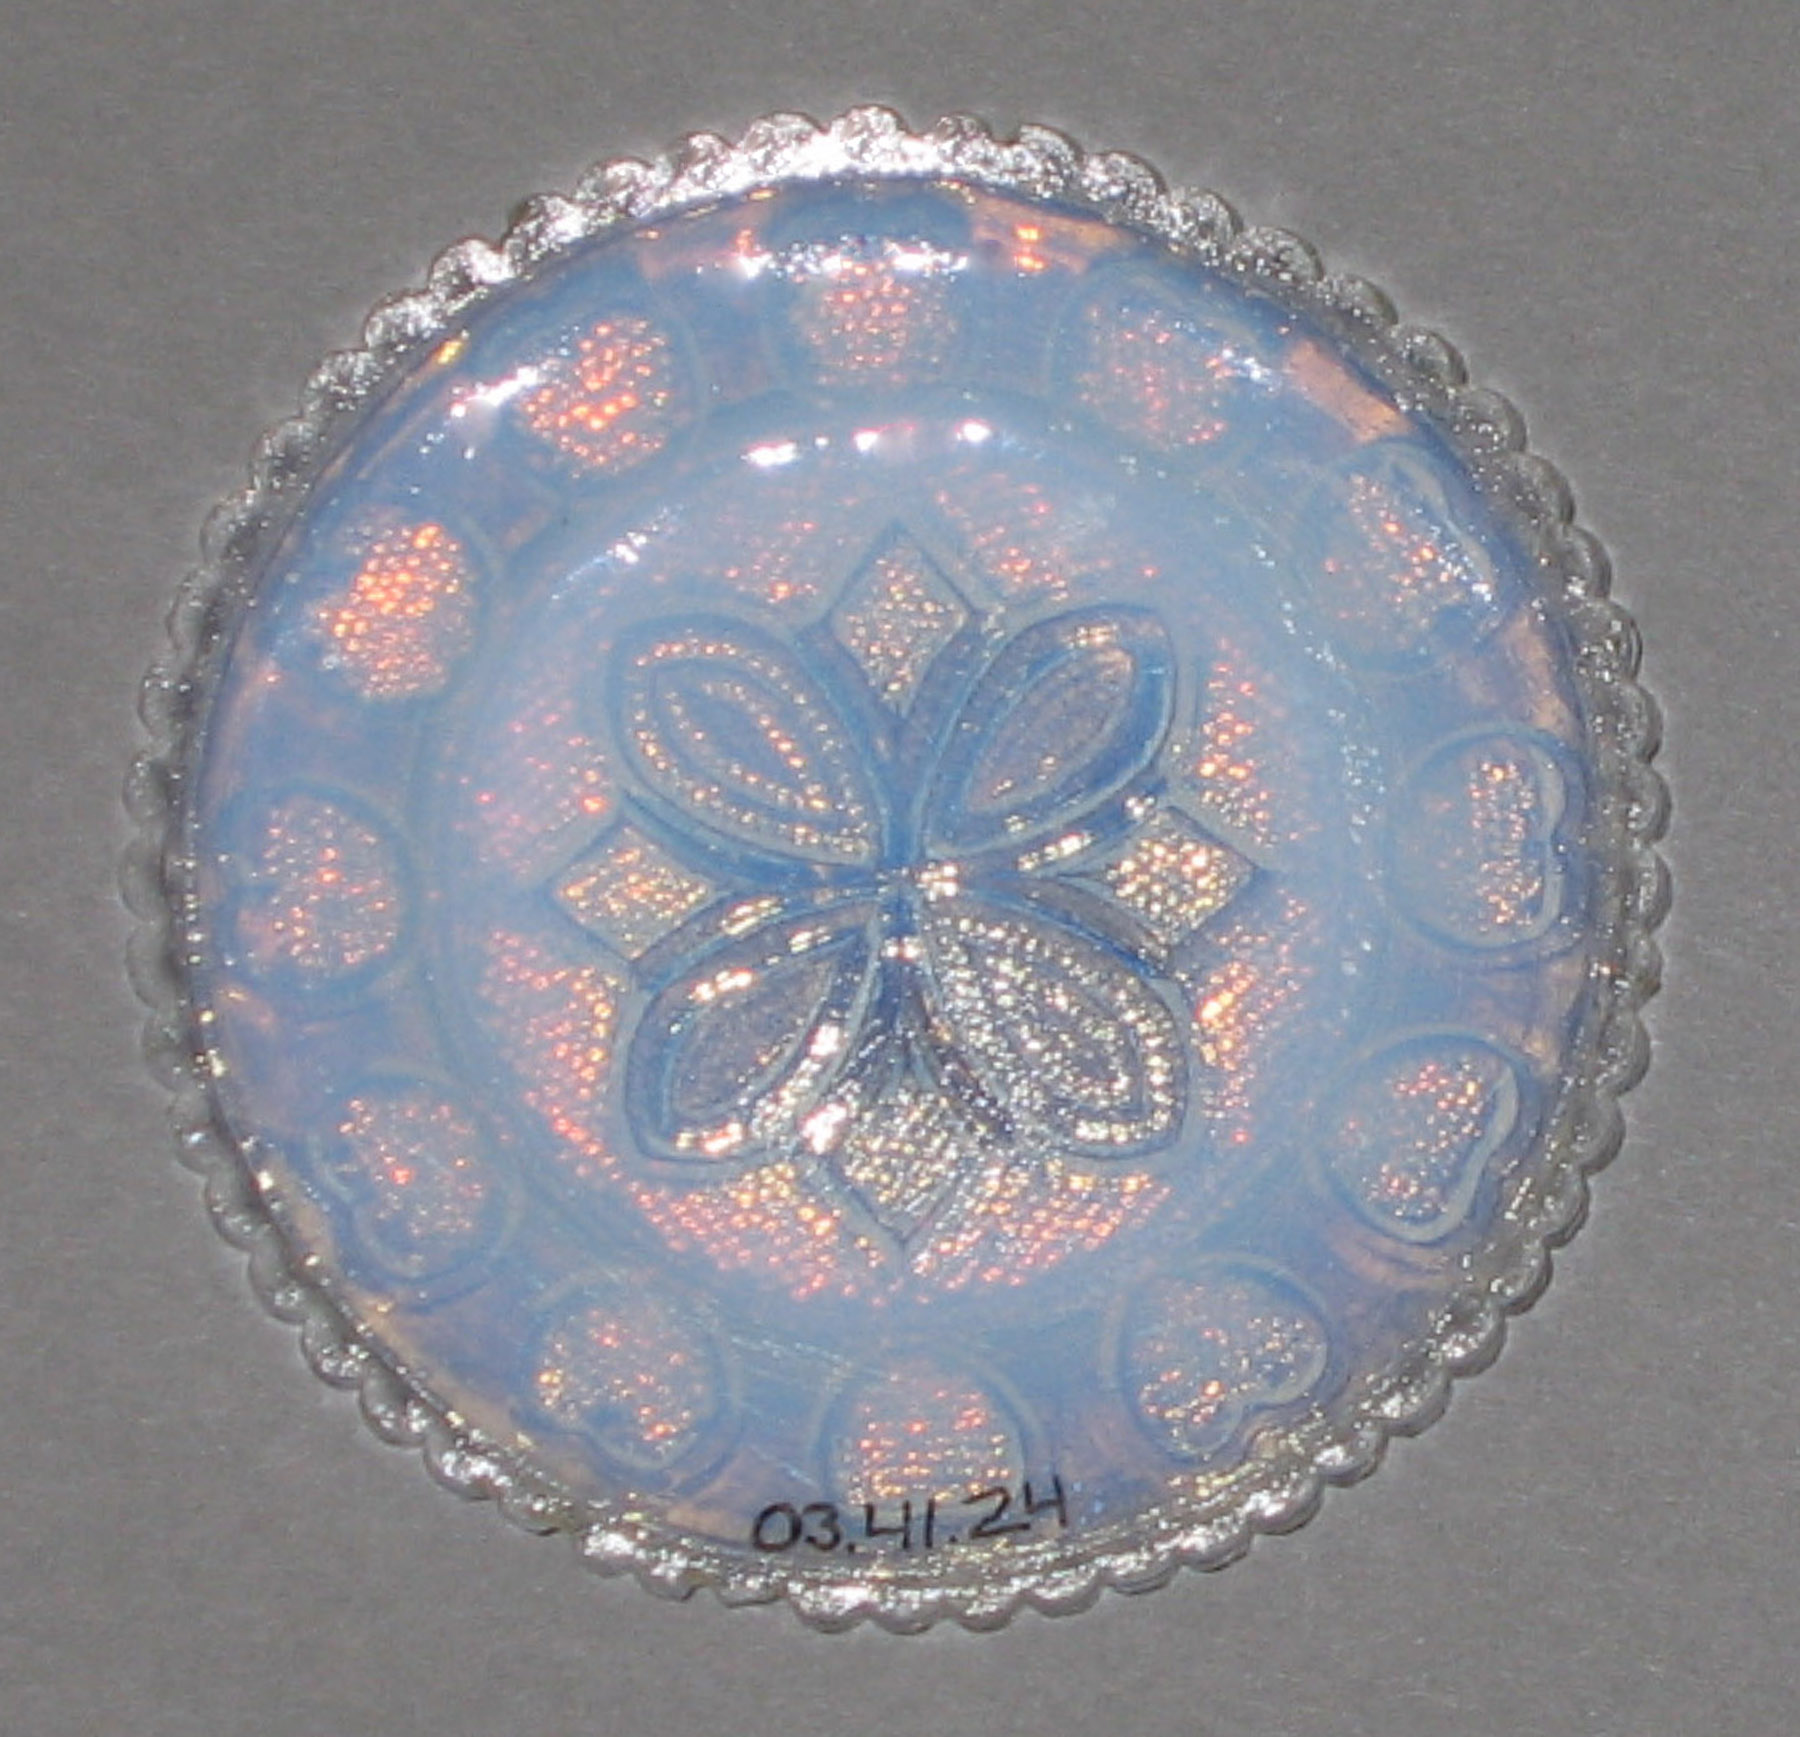 2003.0041.024 Opal glass geometric cup plate